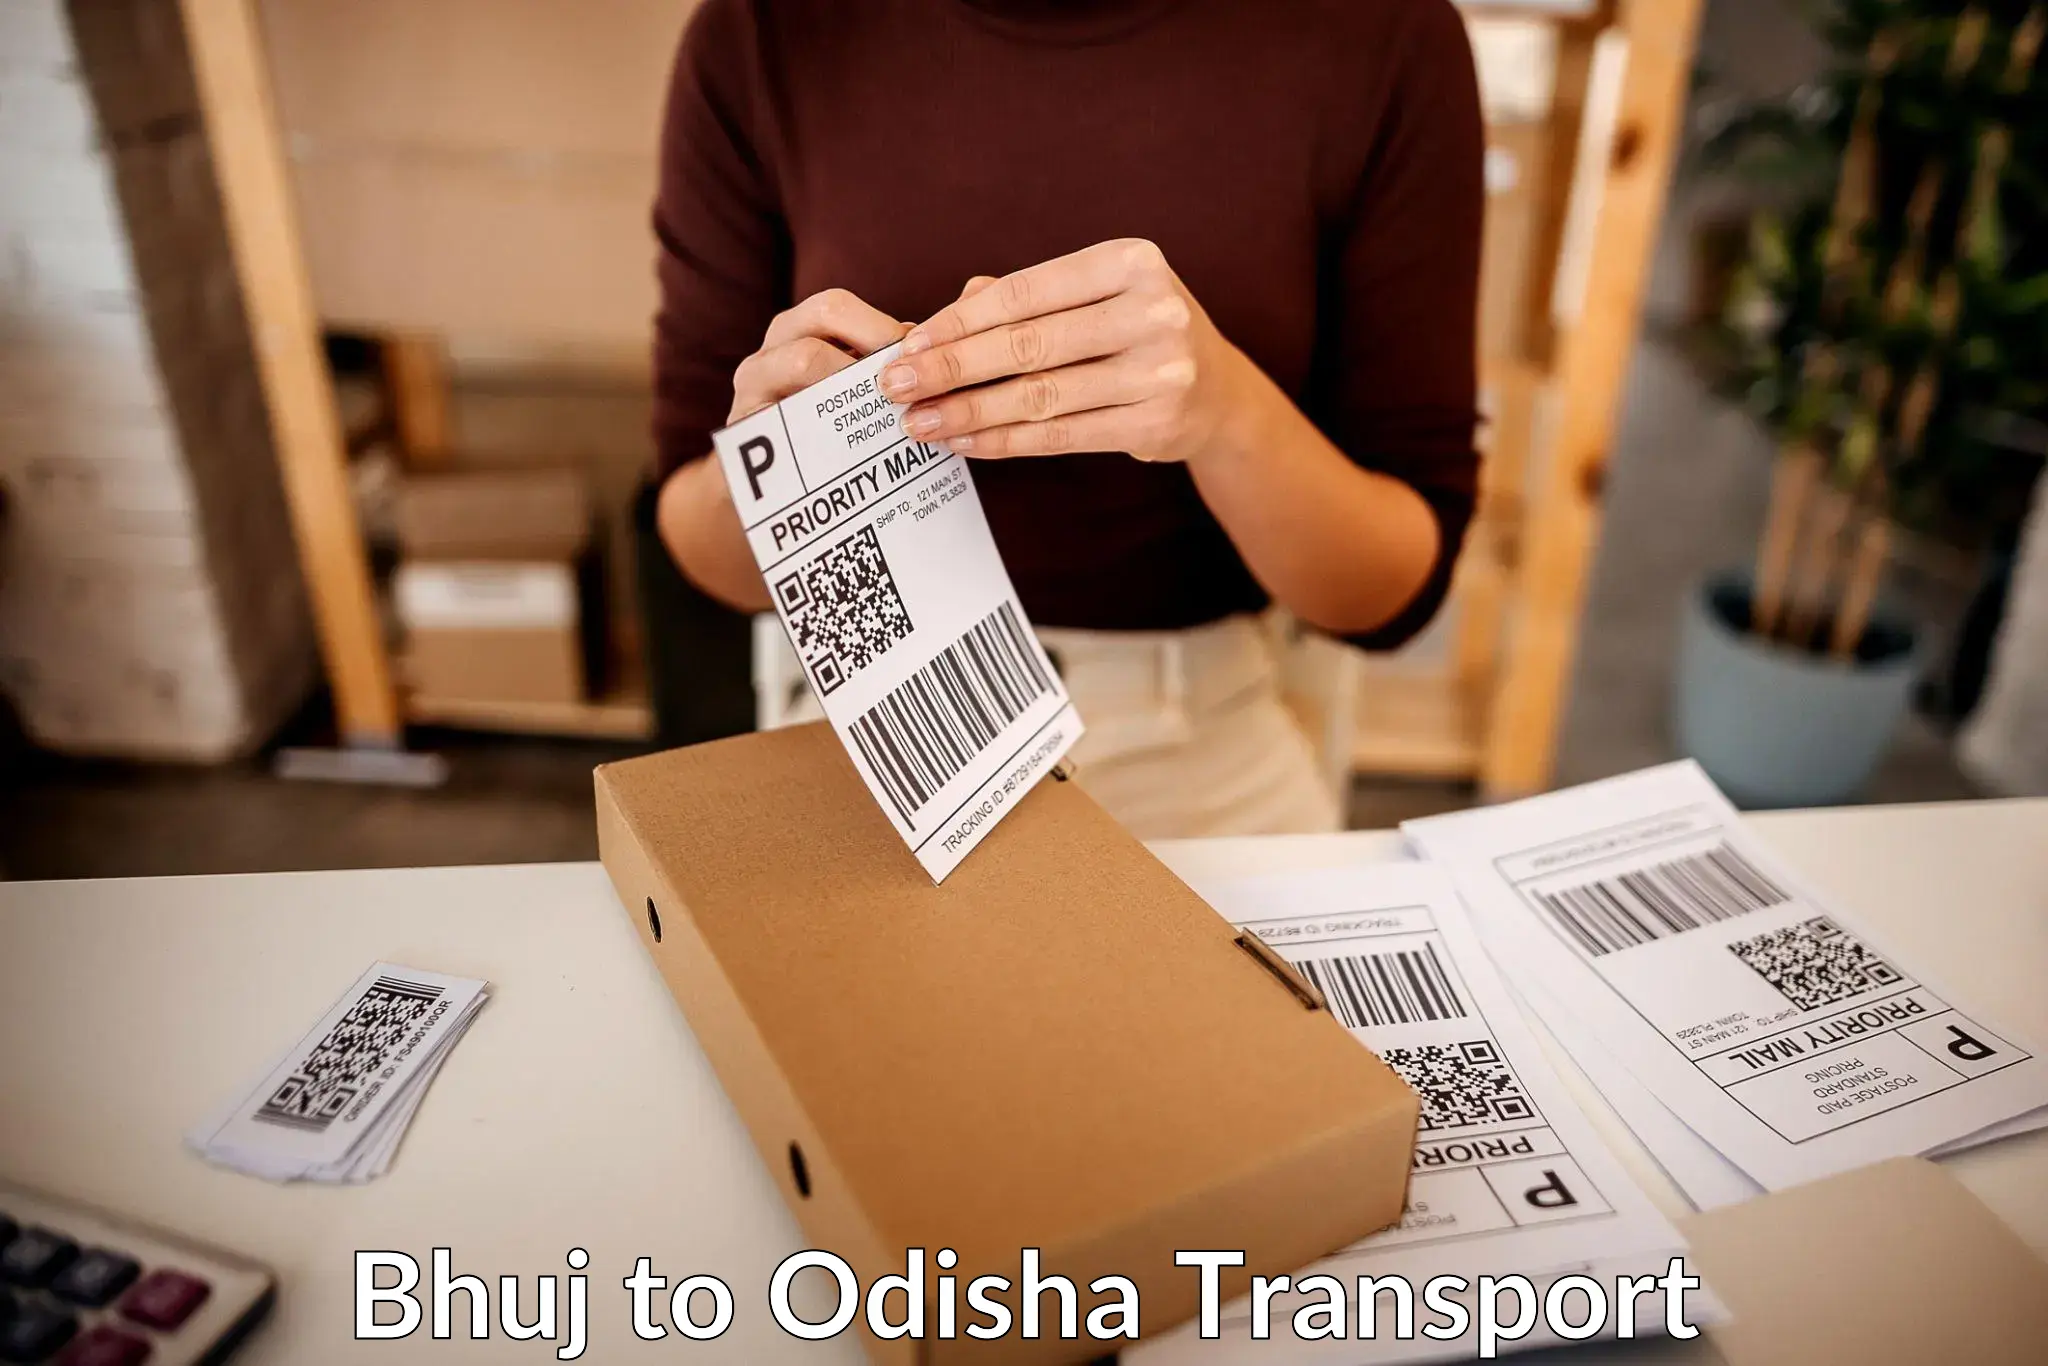 Delivery service Bhuj to Odisha